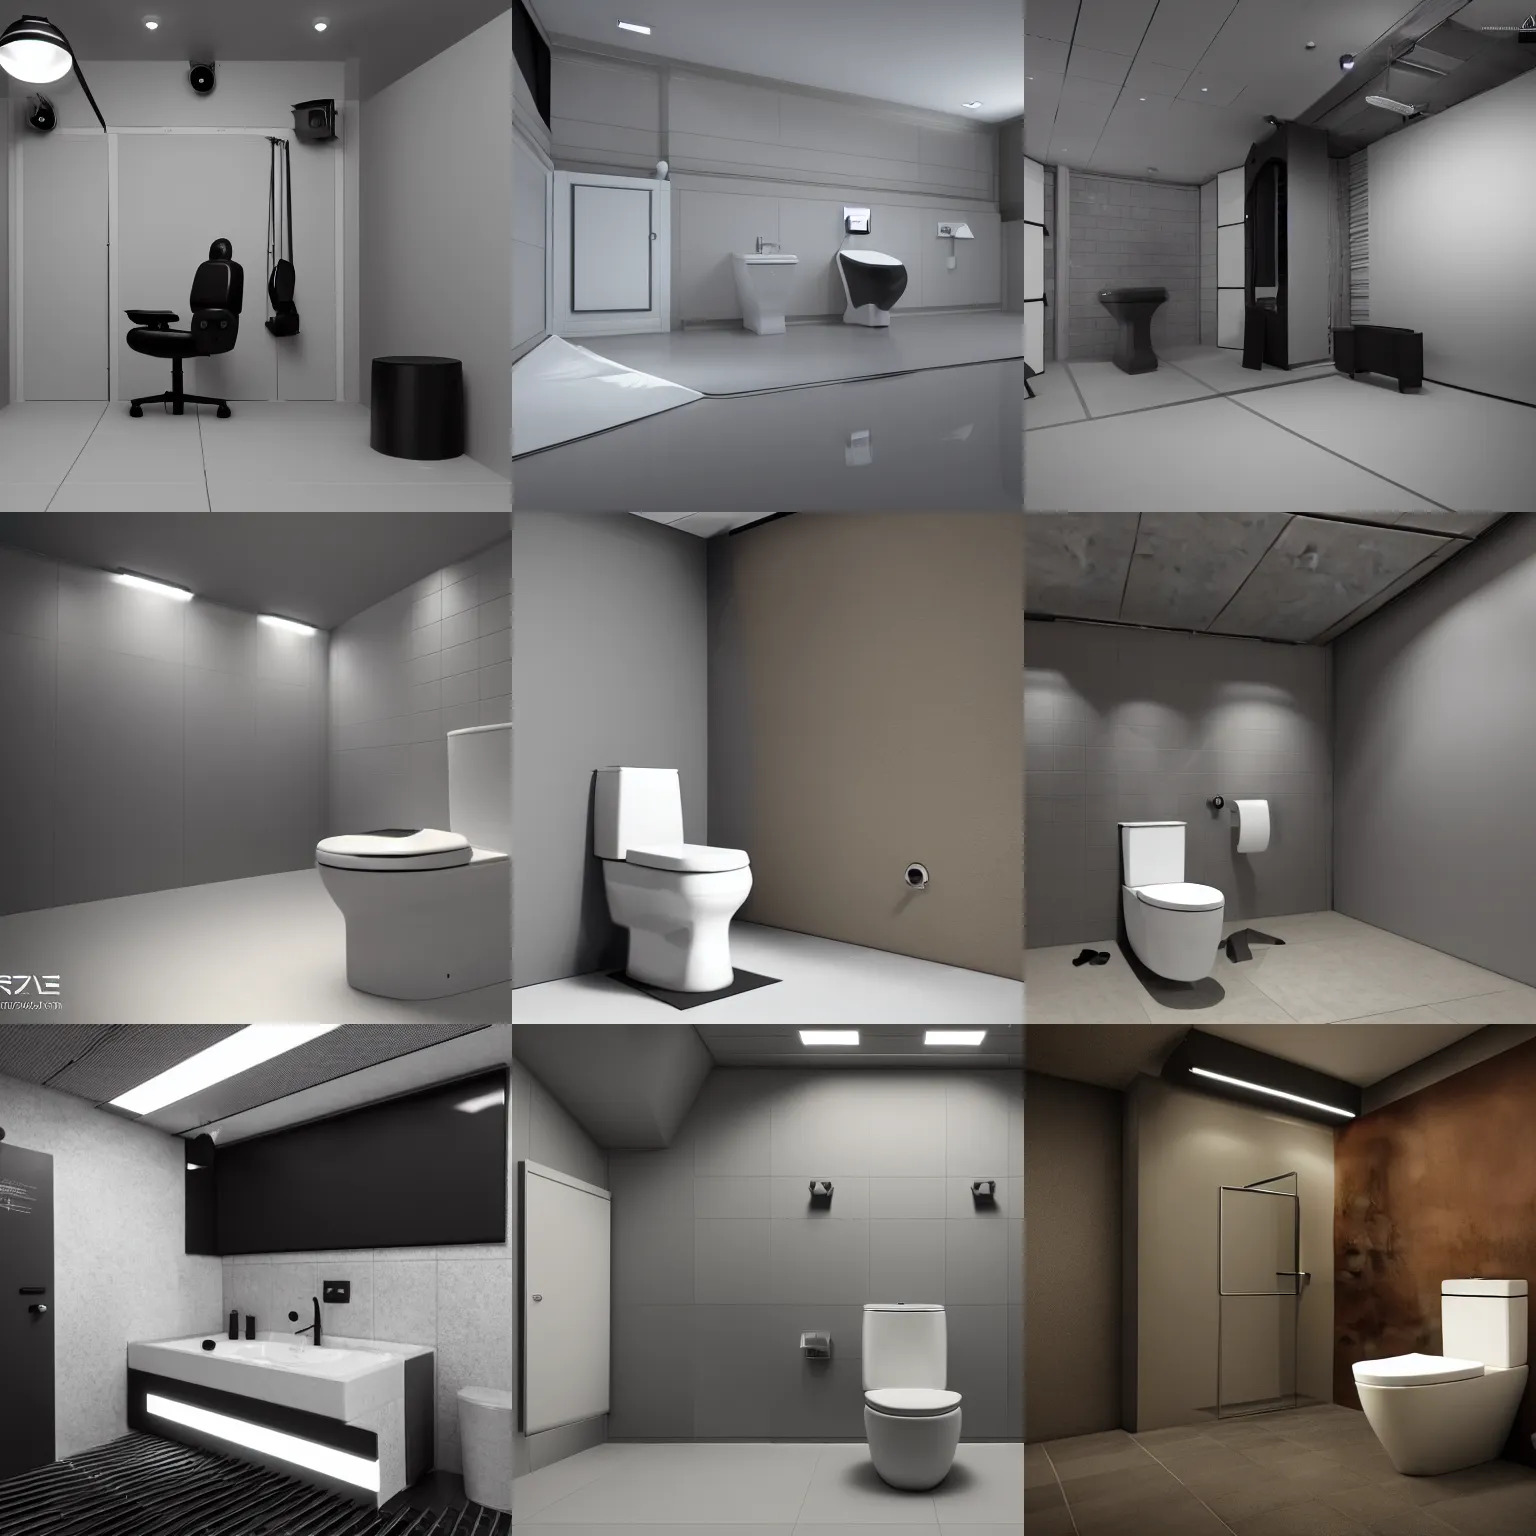 Prompt: professional photo studio of Raze gaming toilet, HD, octane render, dramatic light